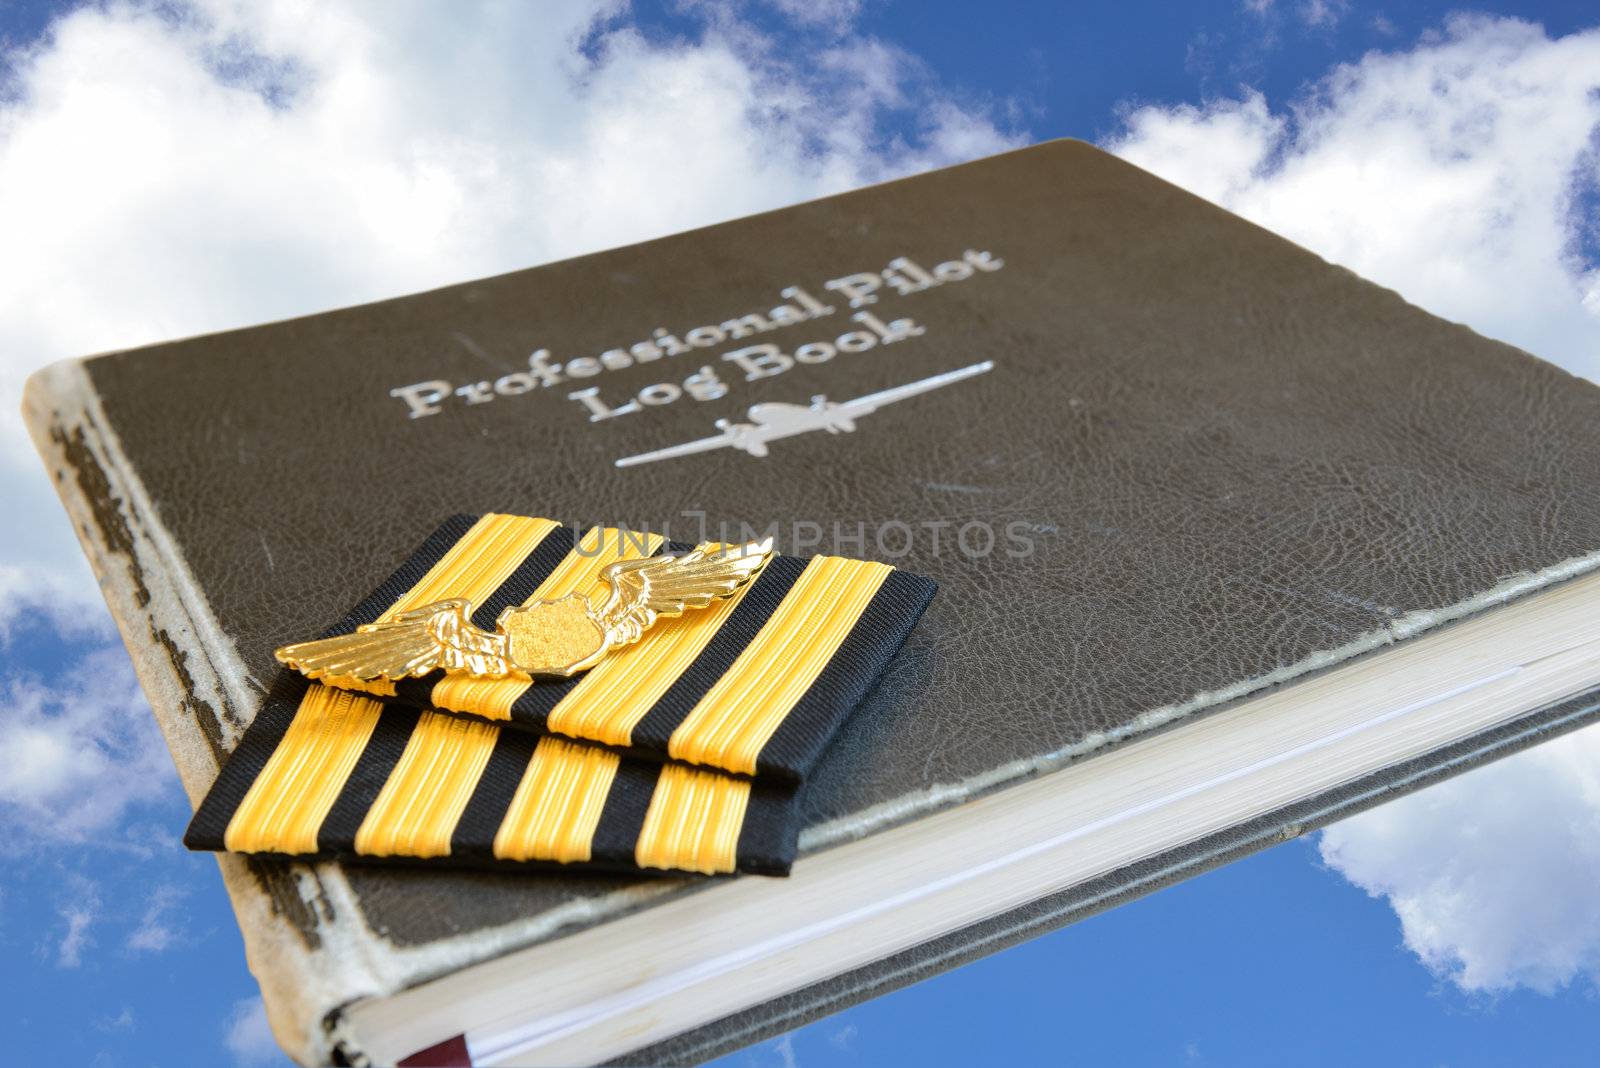 Four bar sign and golden metal wing of pilot put on the old pilot log book.